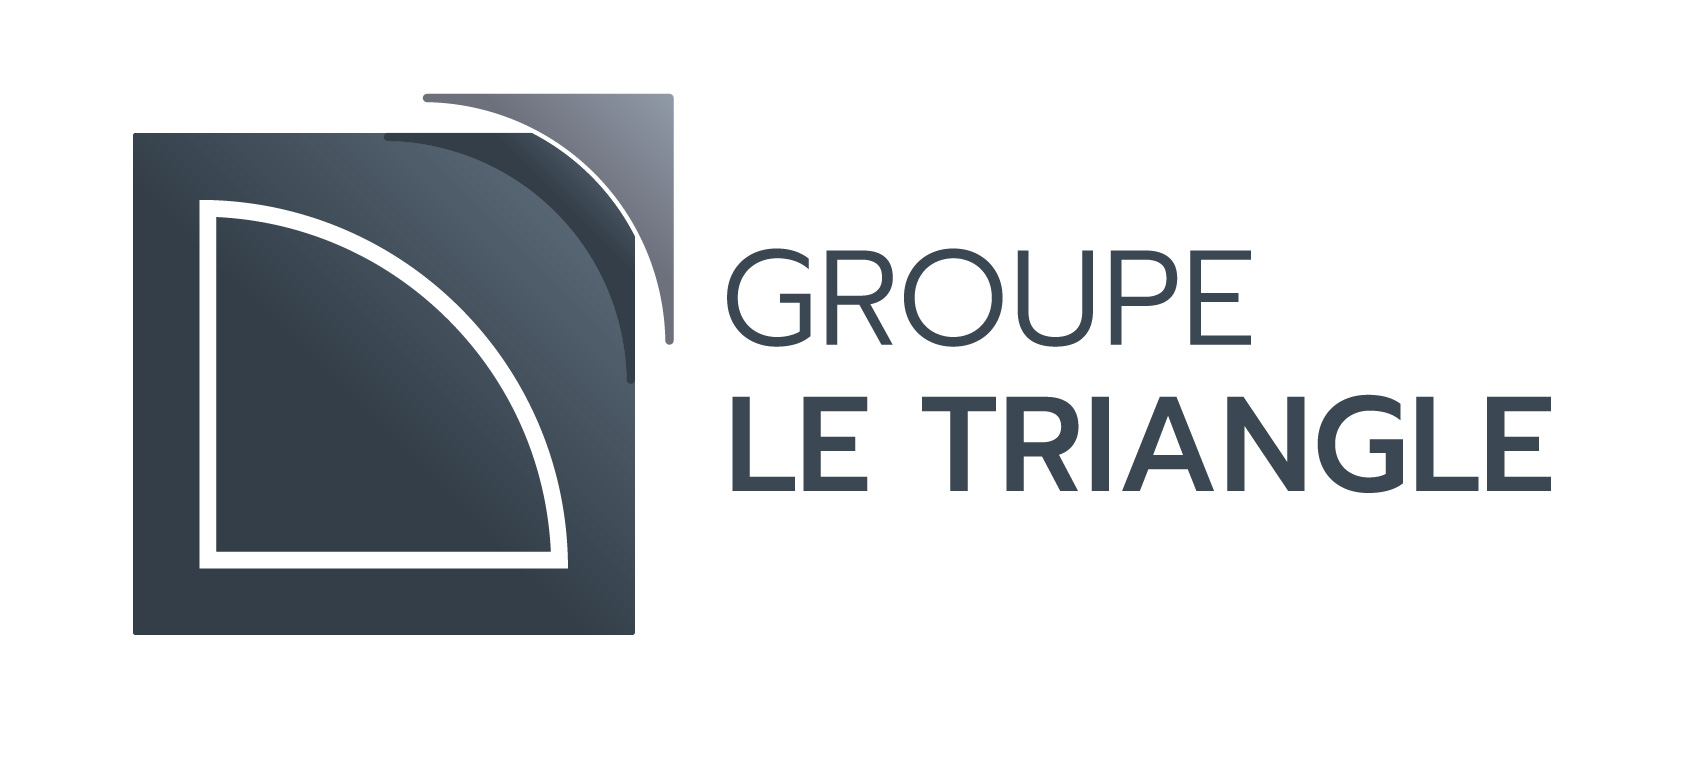 Groupe le Triangle - Logotype 2017 - RVB.jpg